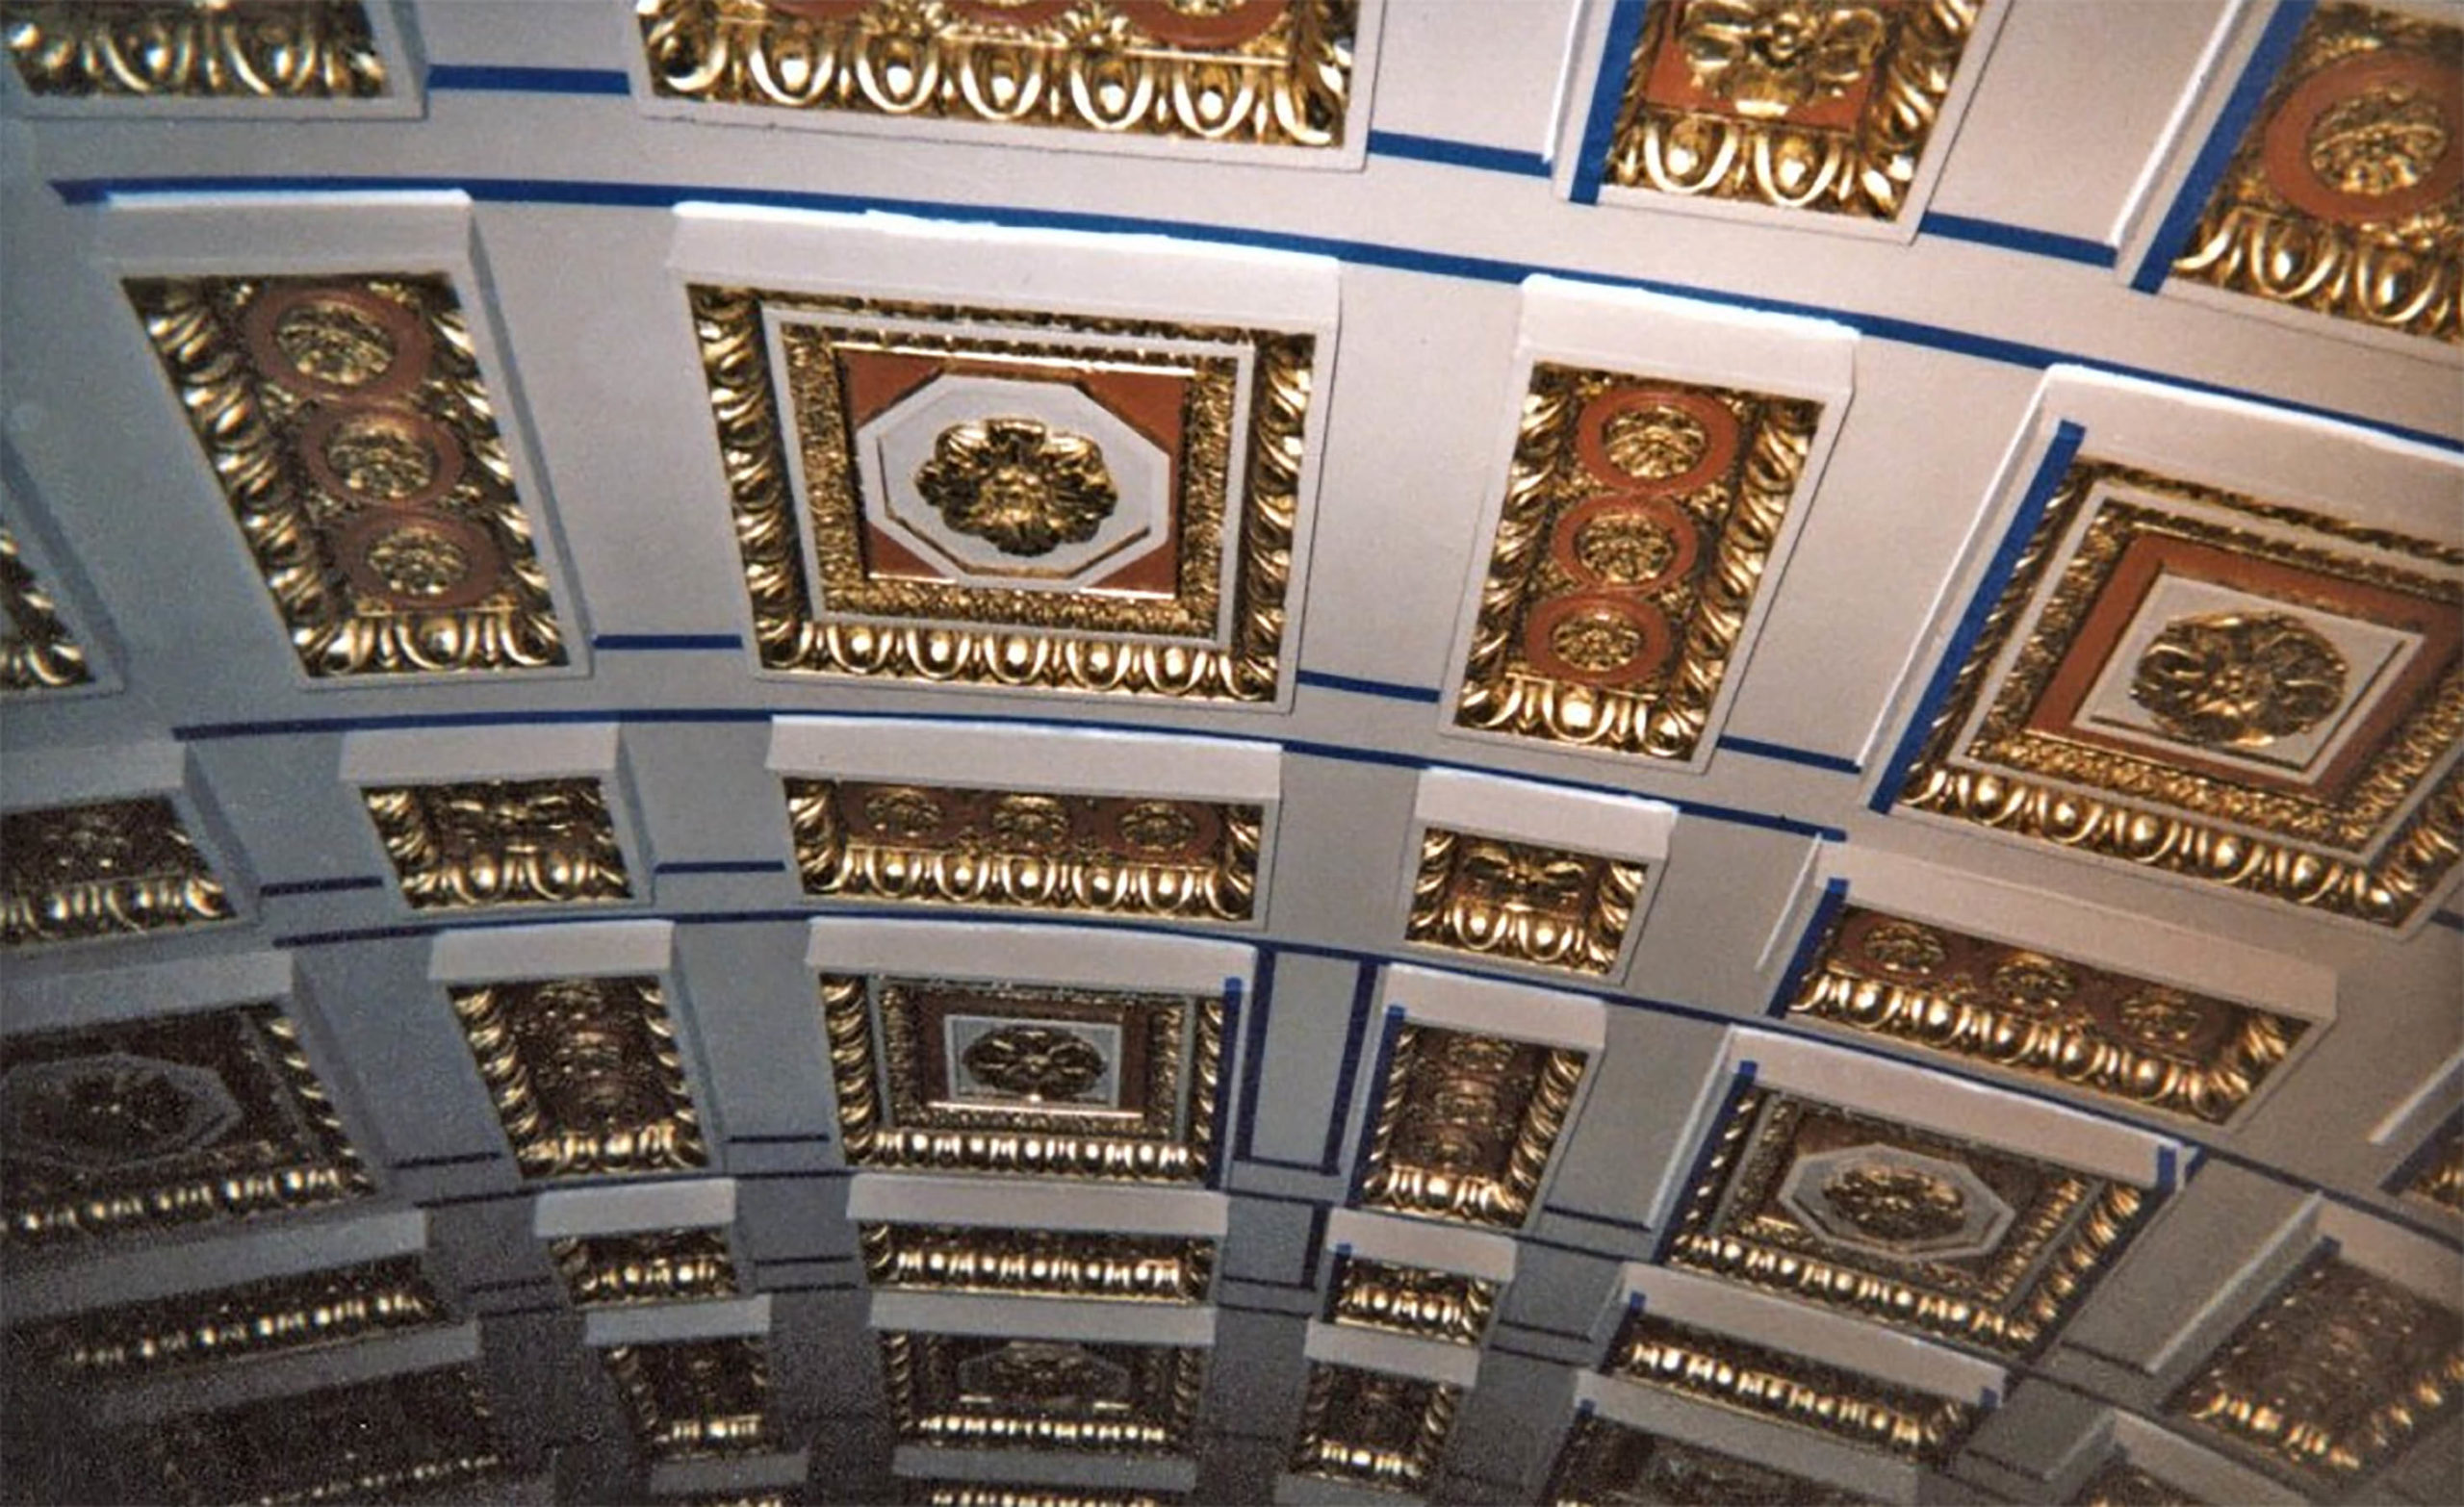 Ornamental Plastering at St. Peter’s Catholic Church